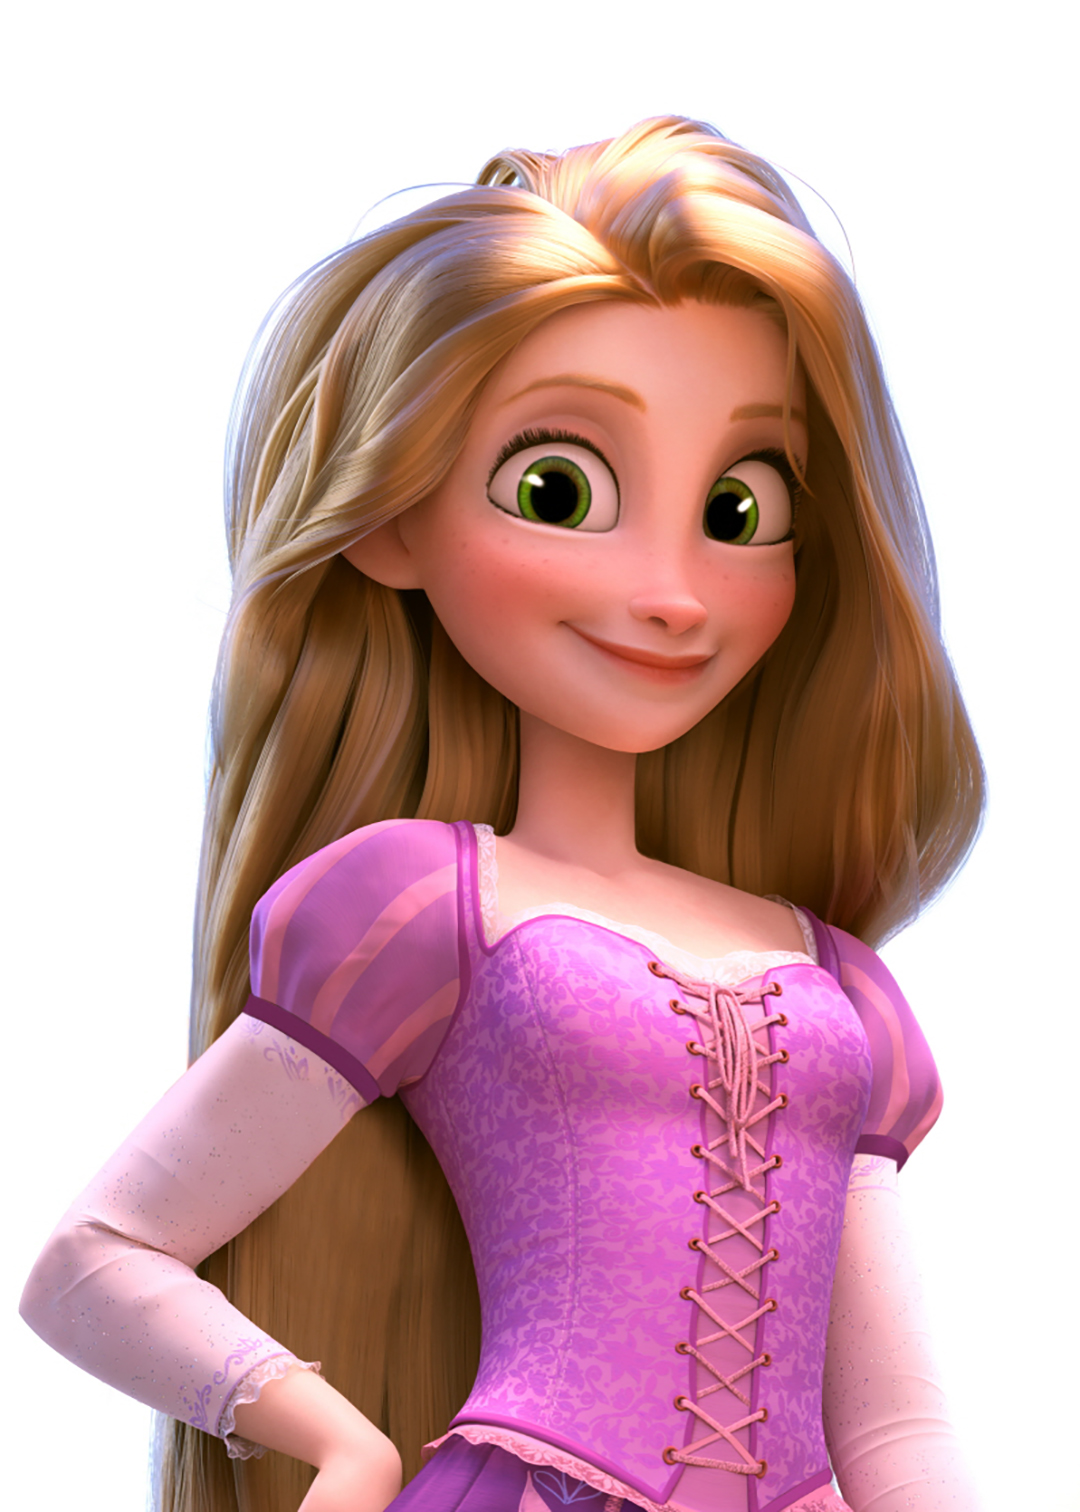 https://static.wikia.nocookie.net/fabulous-character-kingdoms/images/8/81/Queen_Rapunzel_Fitzherbert_of_Corona_RBTI_HD.jpg/revision/latest?cb=20210516033202